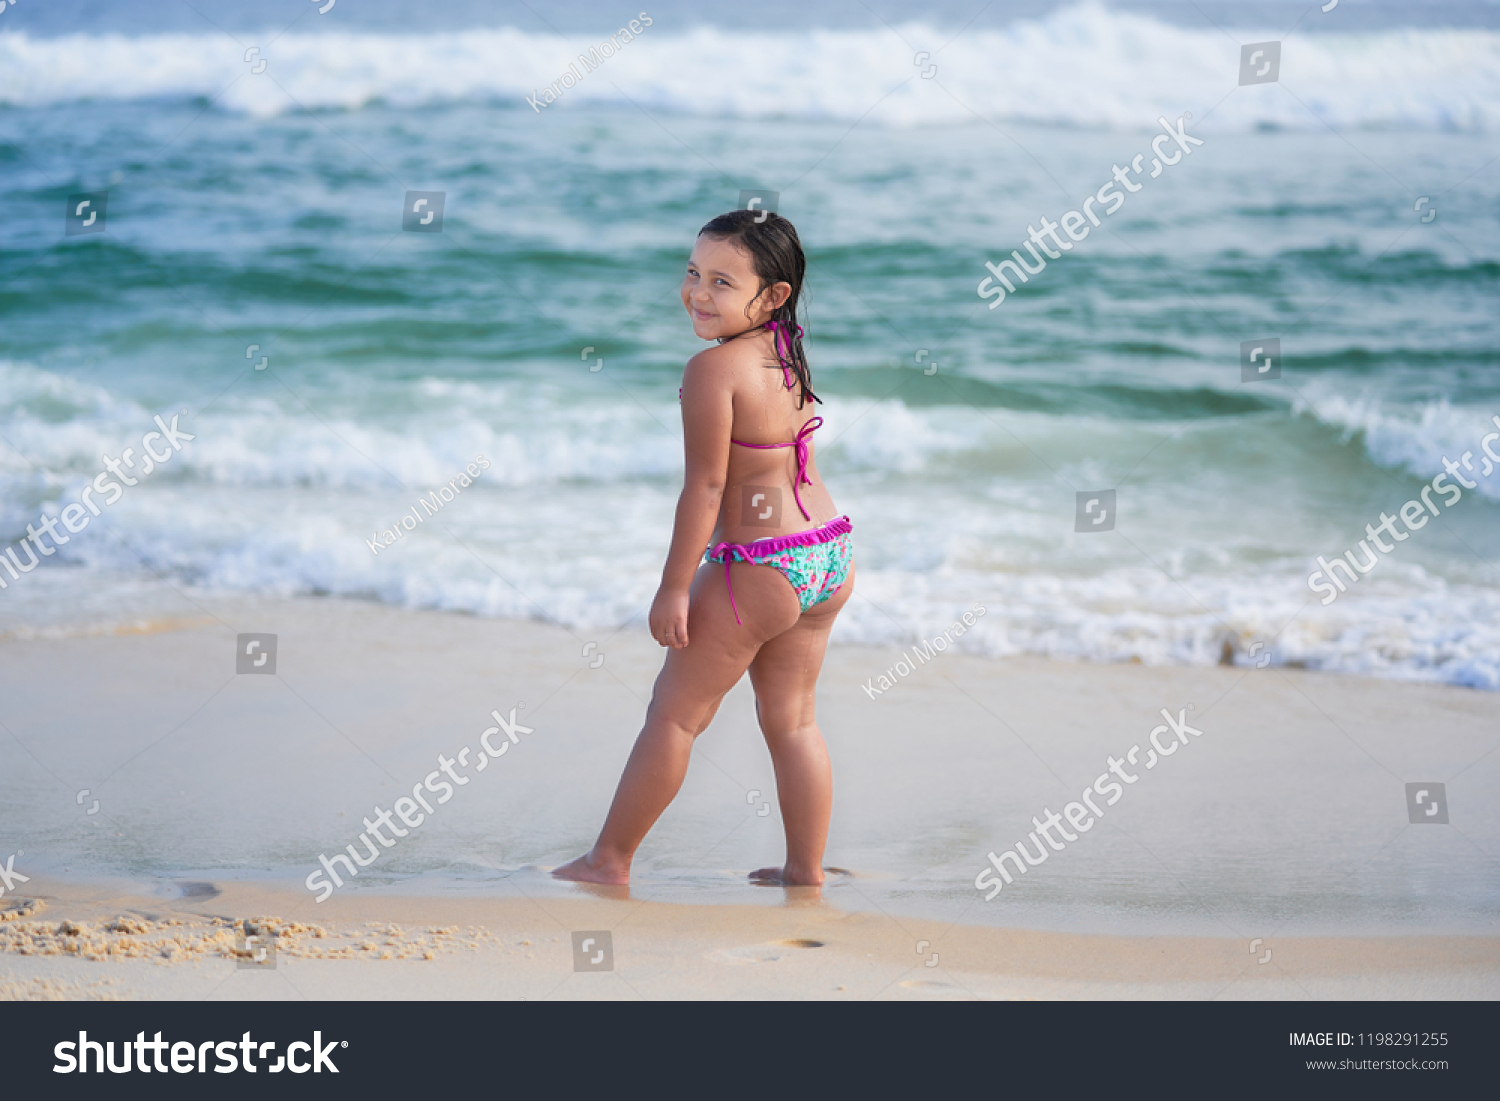 Chubby Girls At Beach